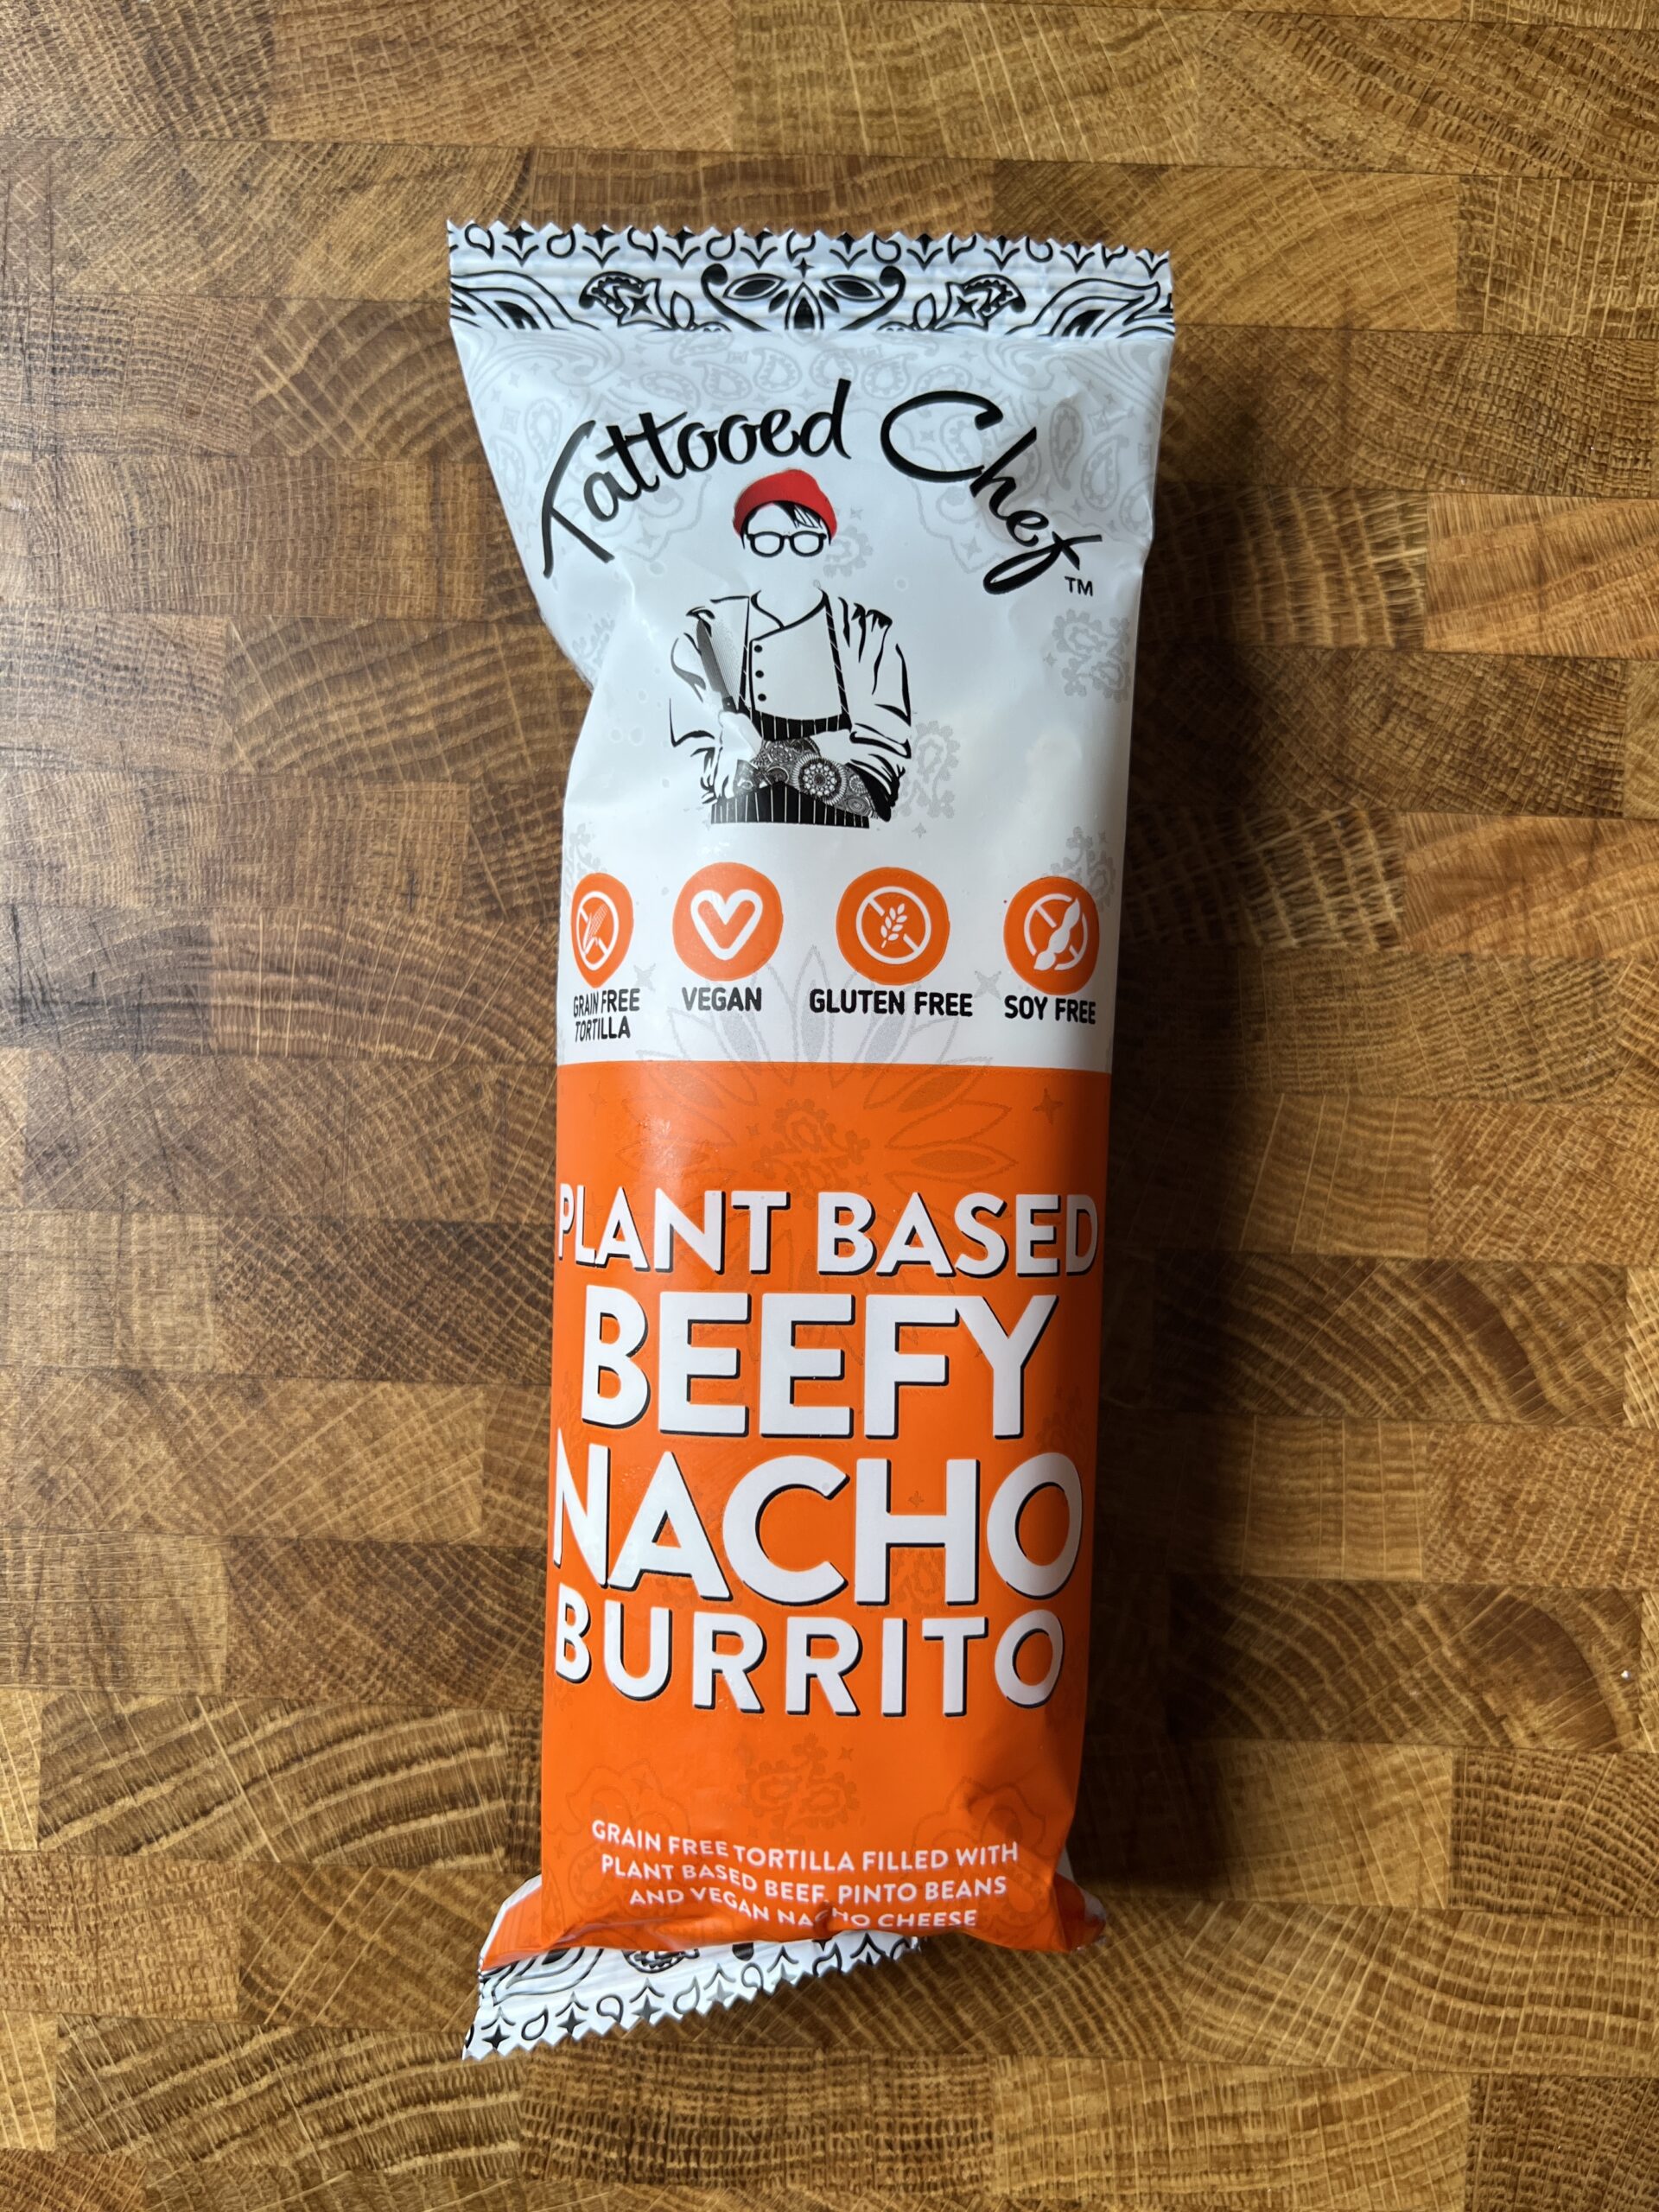 Tattooed chef vegan plant-based Beefy Nacho Burrito package. 